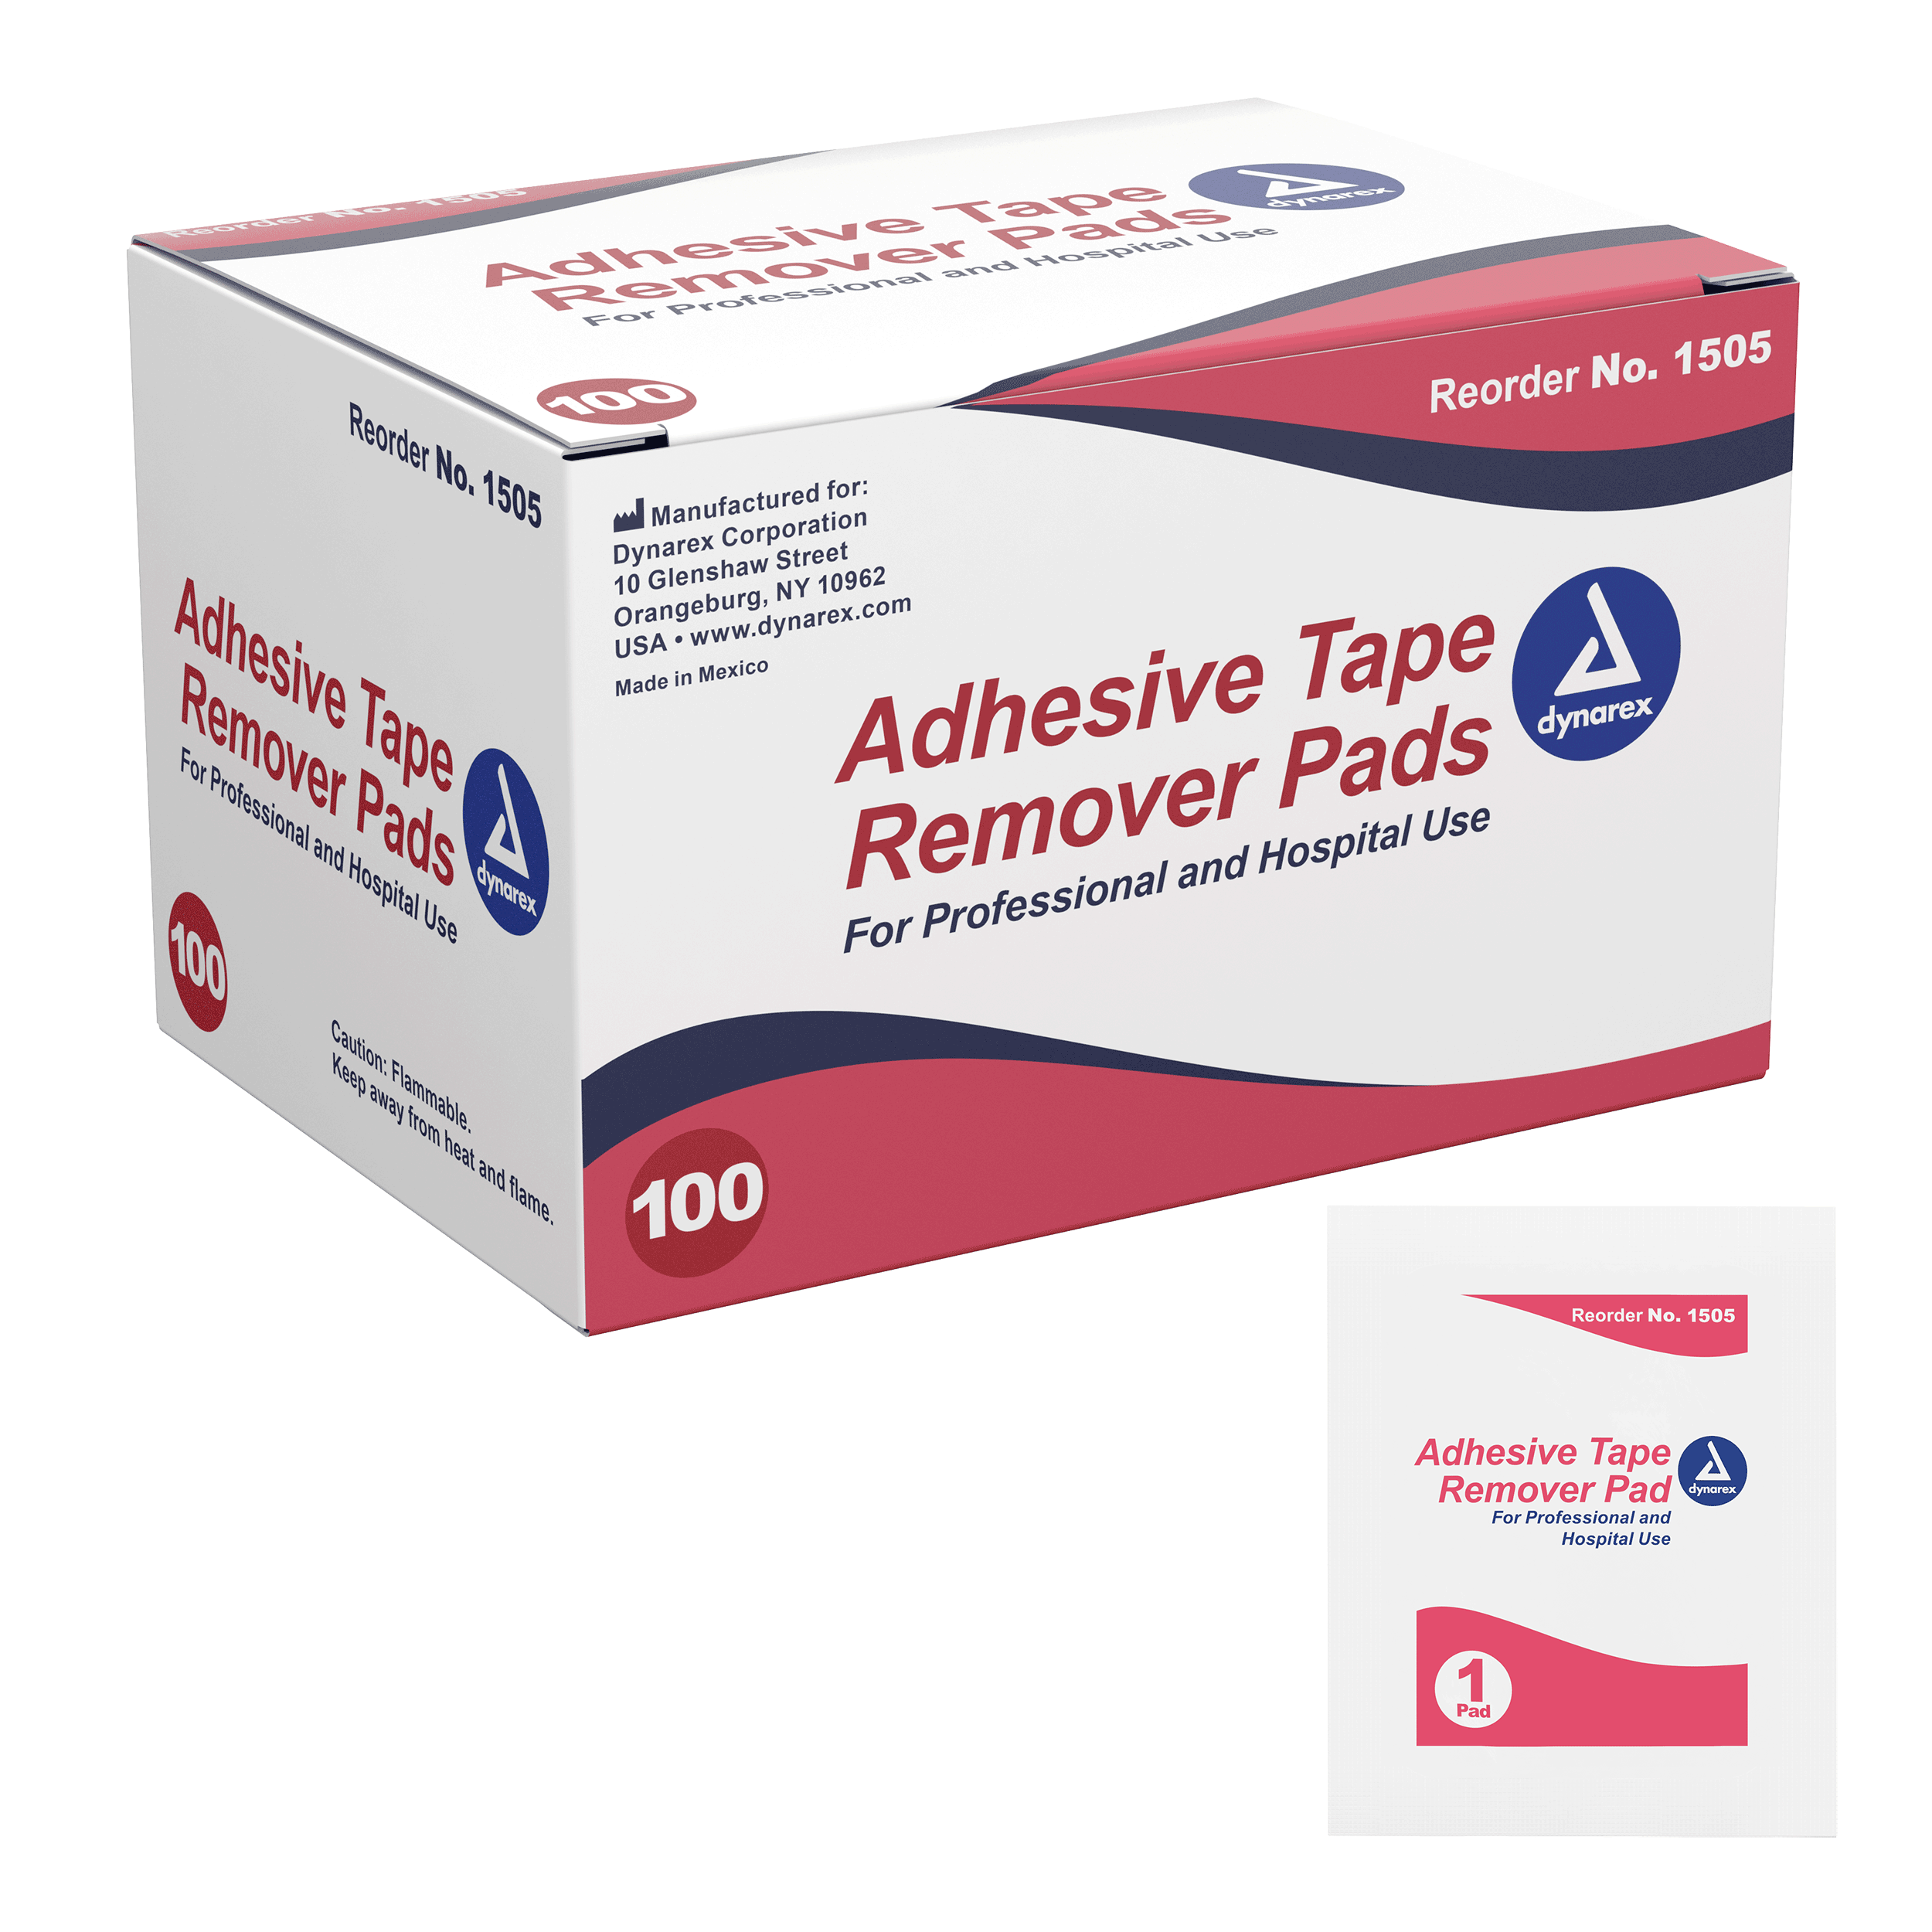 Adhesive Tape Remover Pad